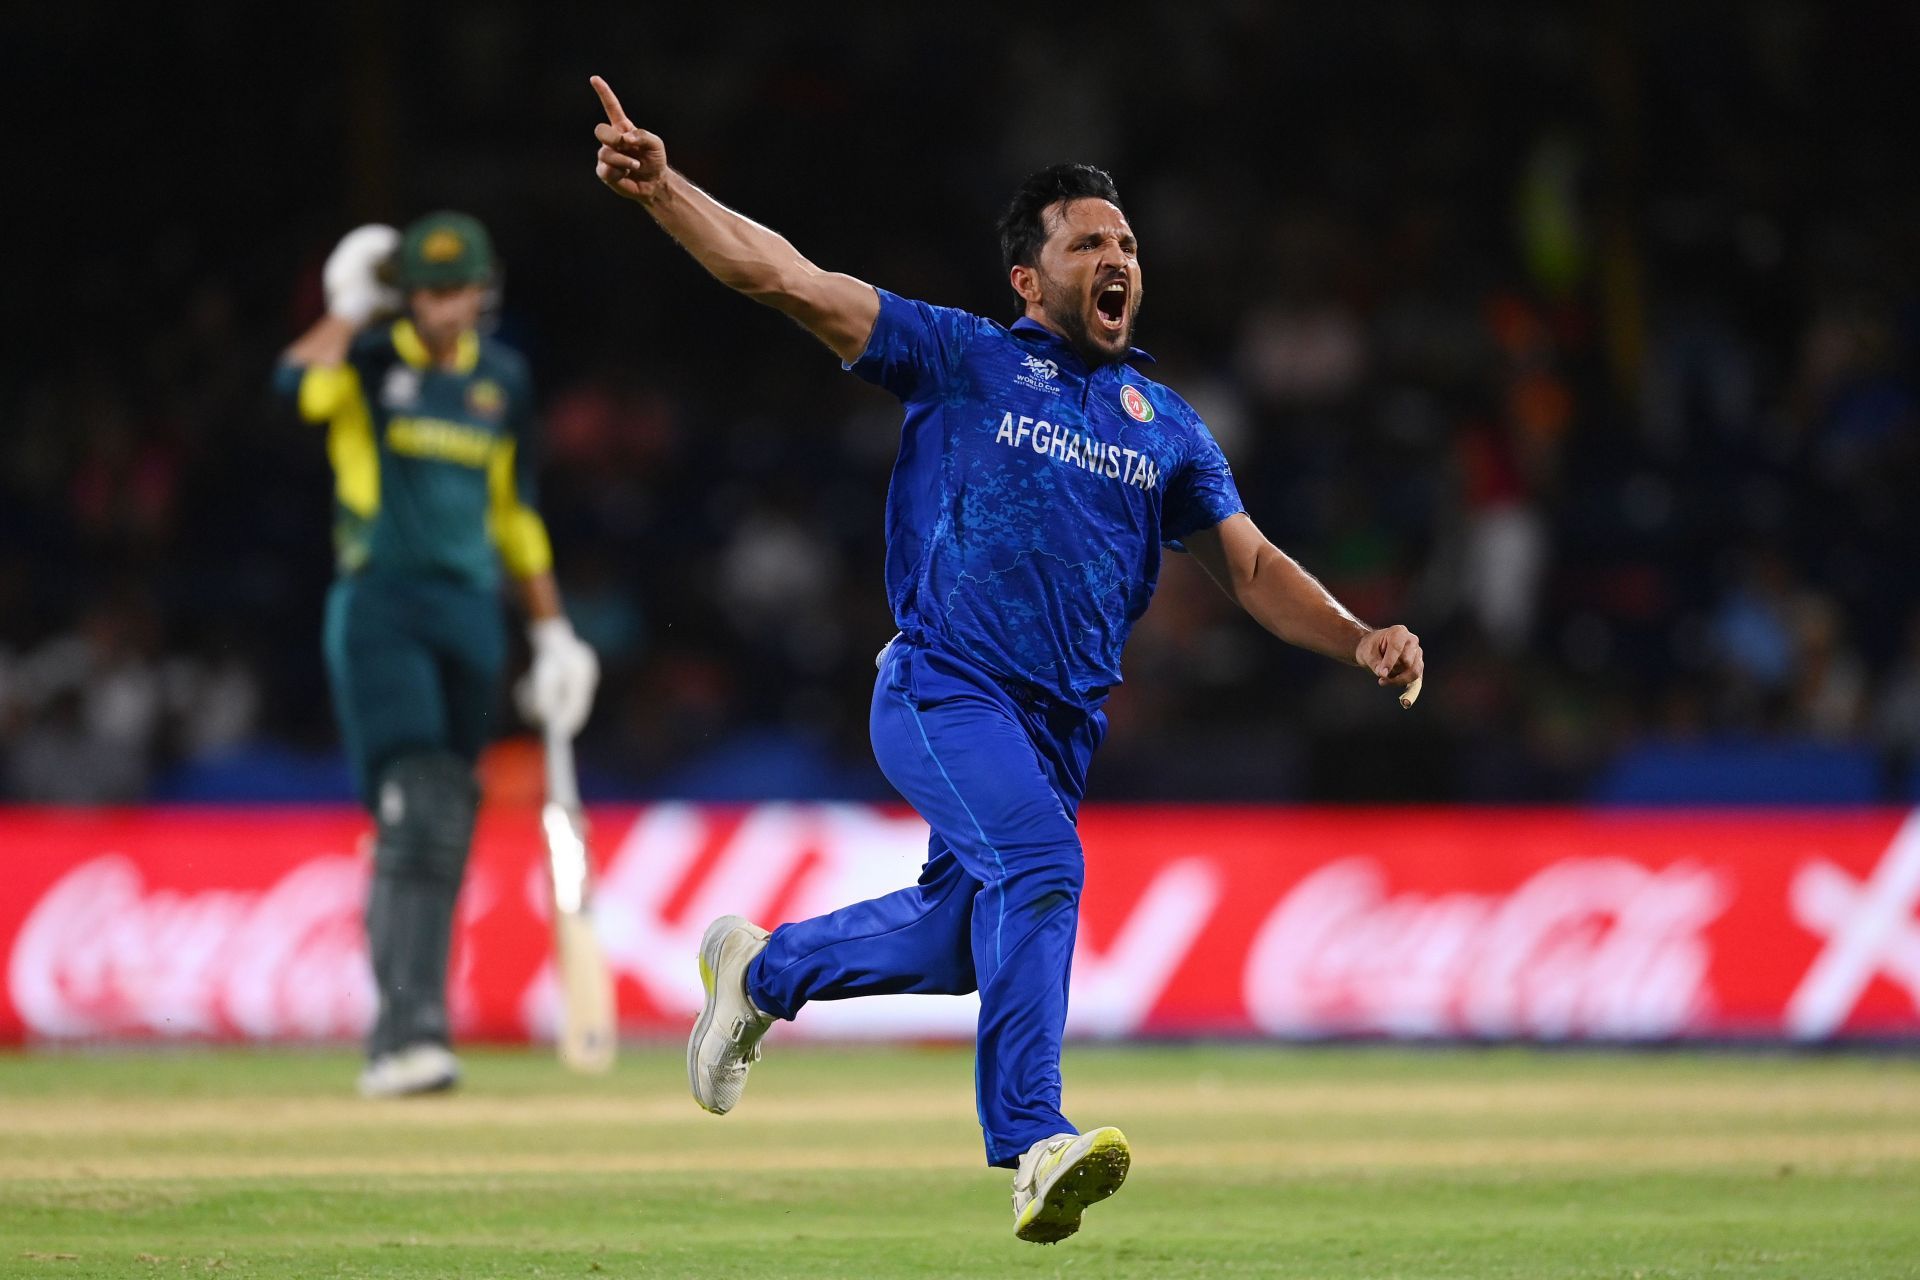 Gulbadin Naib celebrates a wicket against Australia. (Image Credit: Getty Images)